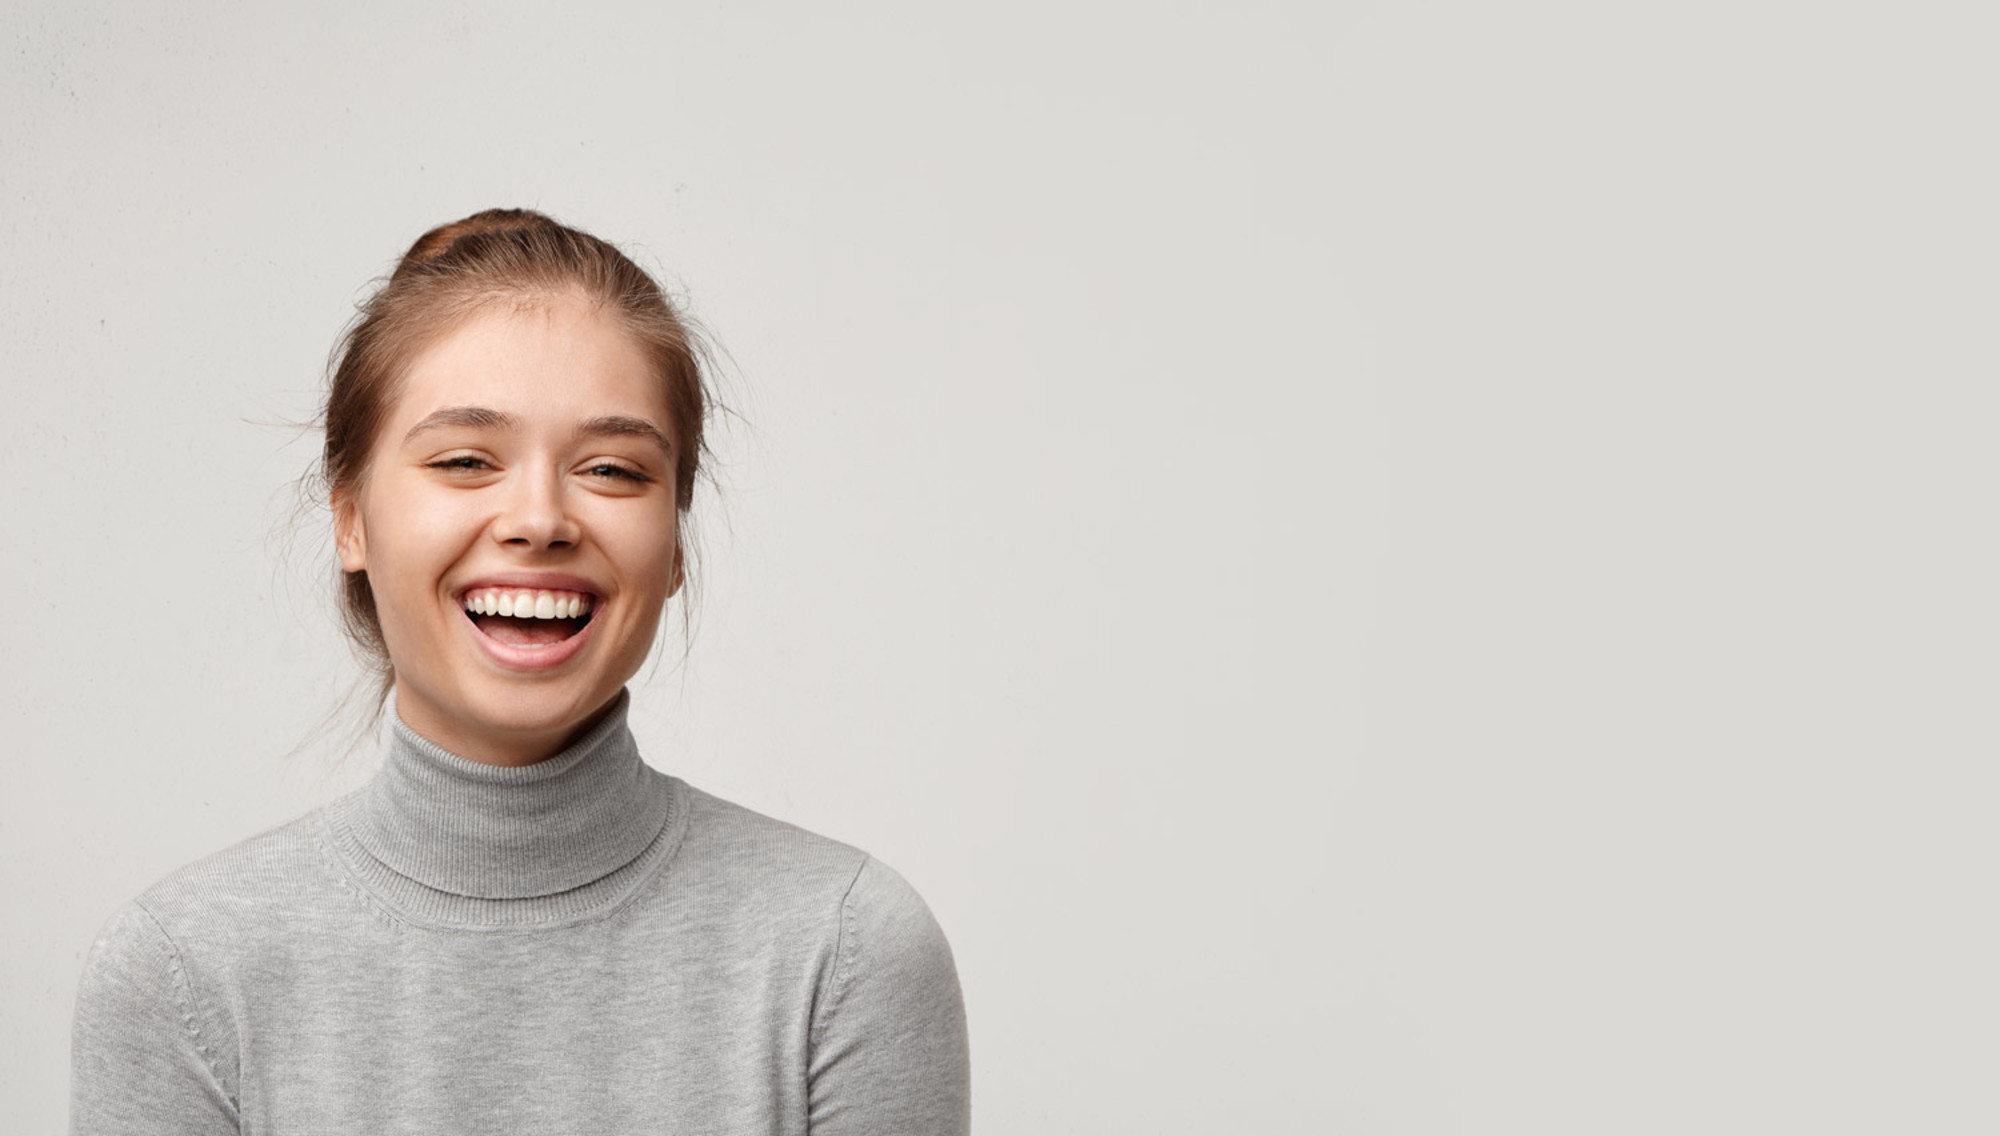 Caucasian Blond Girl Smiling Grey Sweater